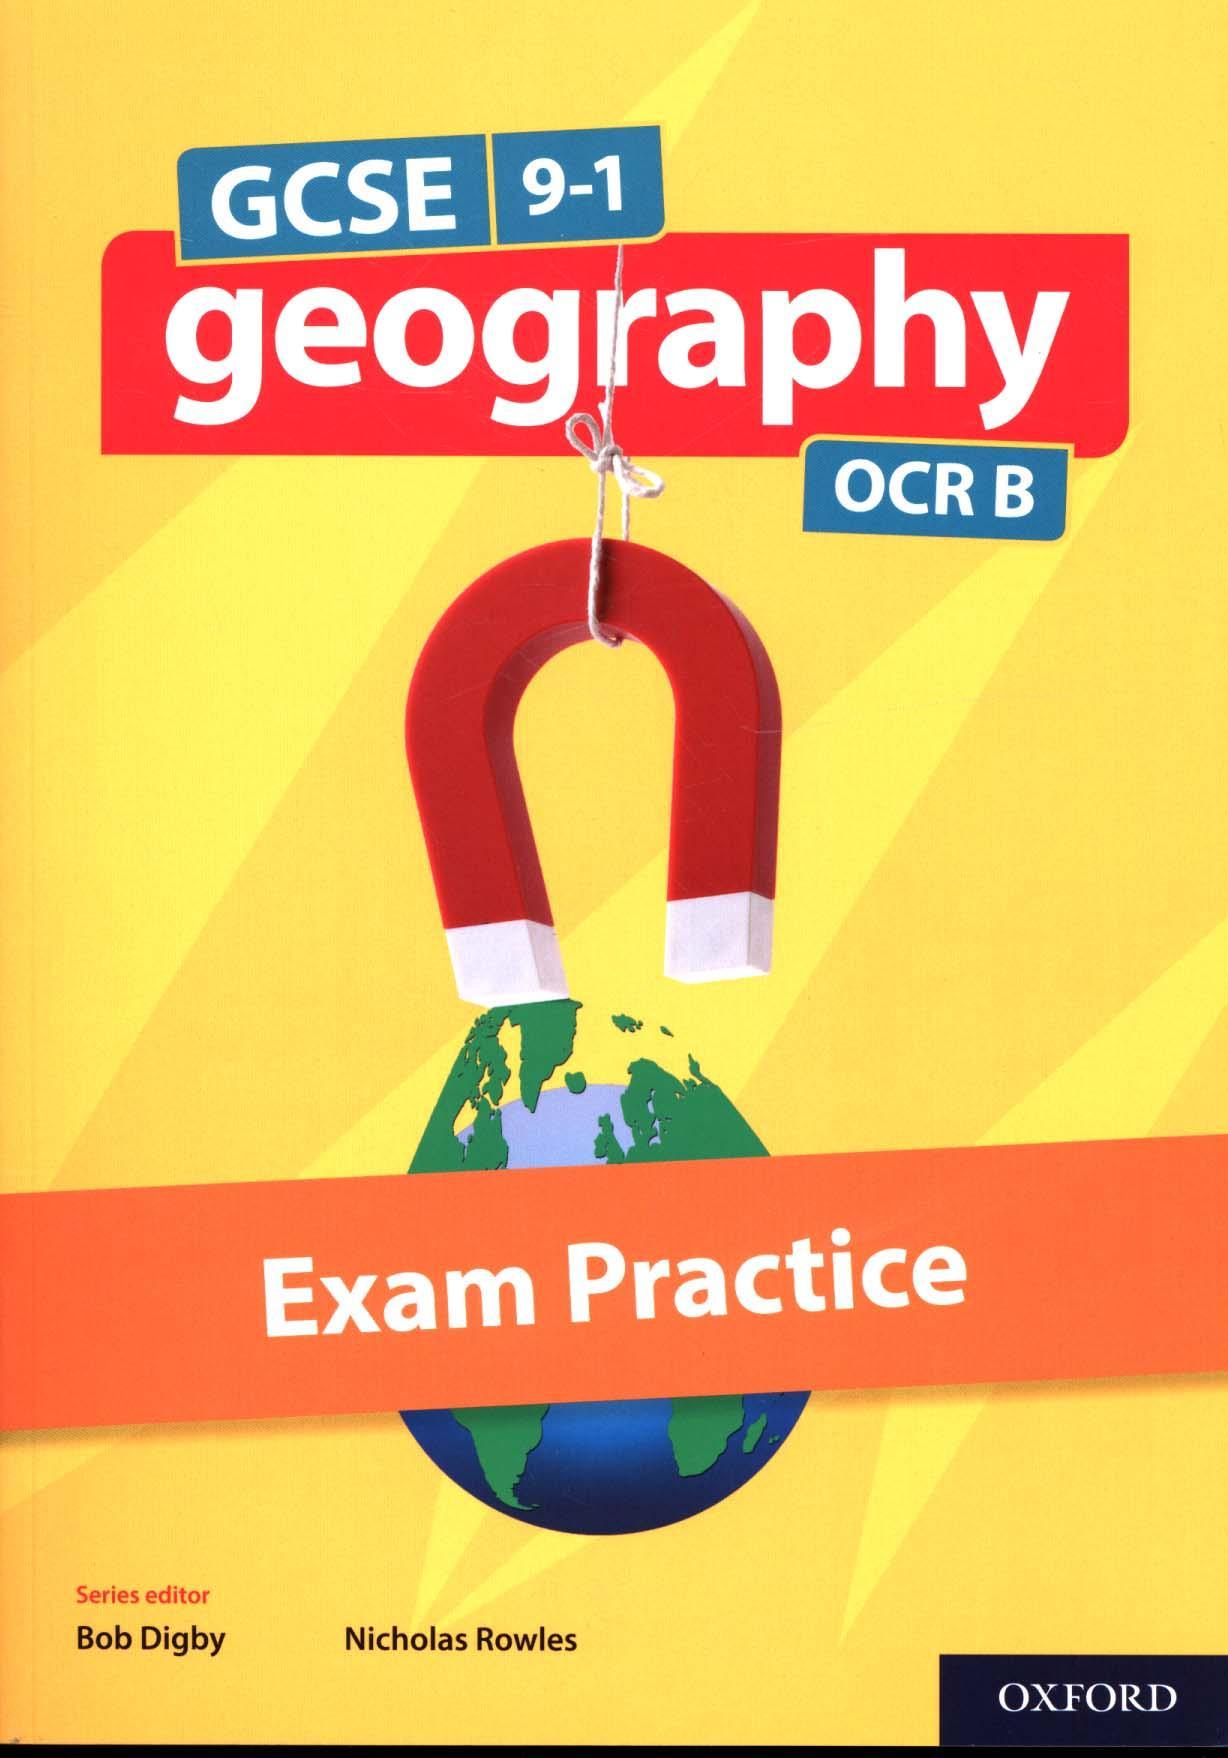 GCSE Geography OCR B Exam Practice